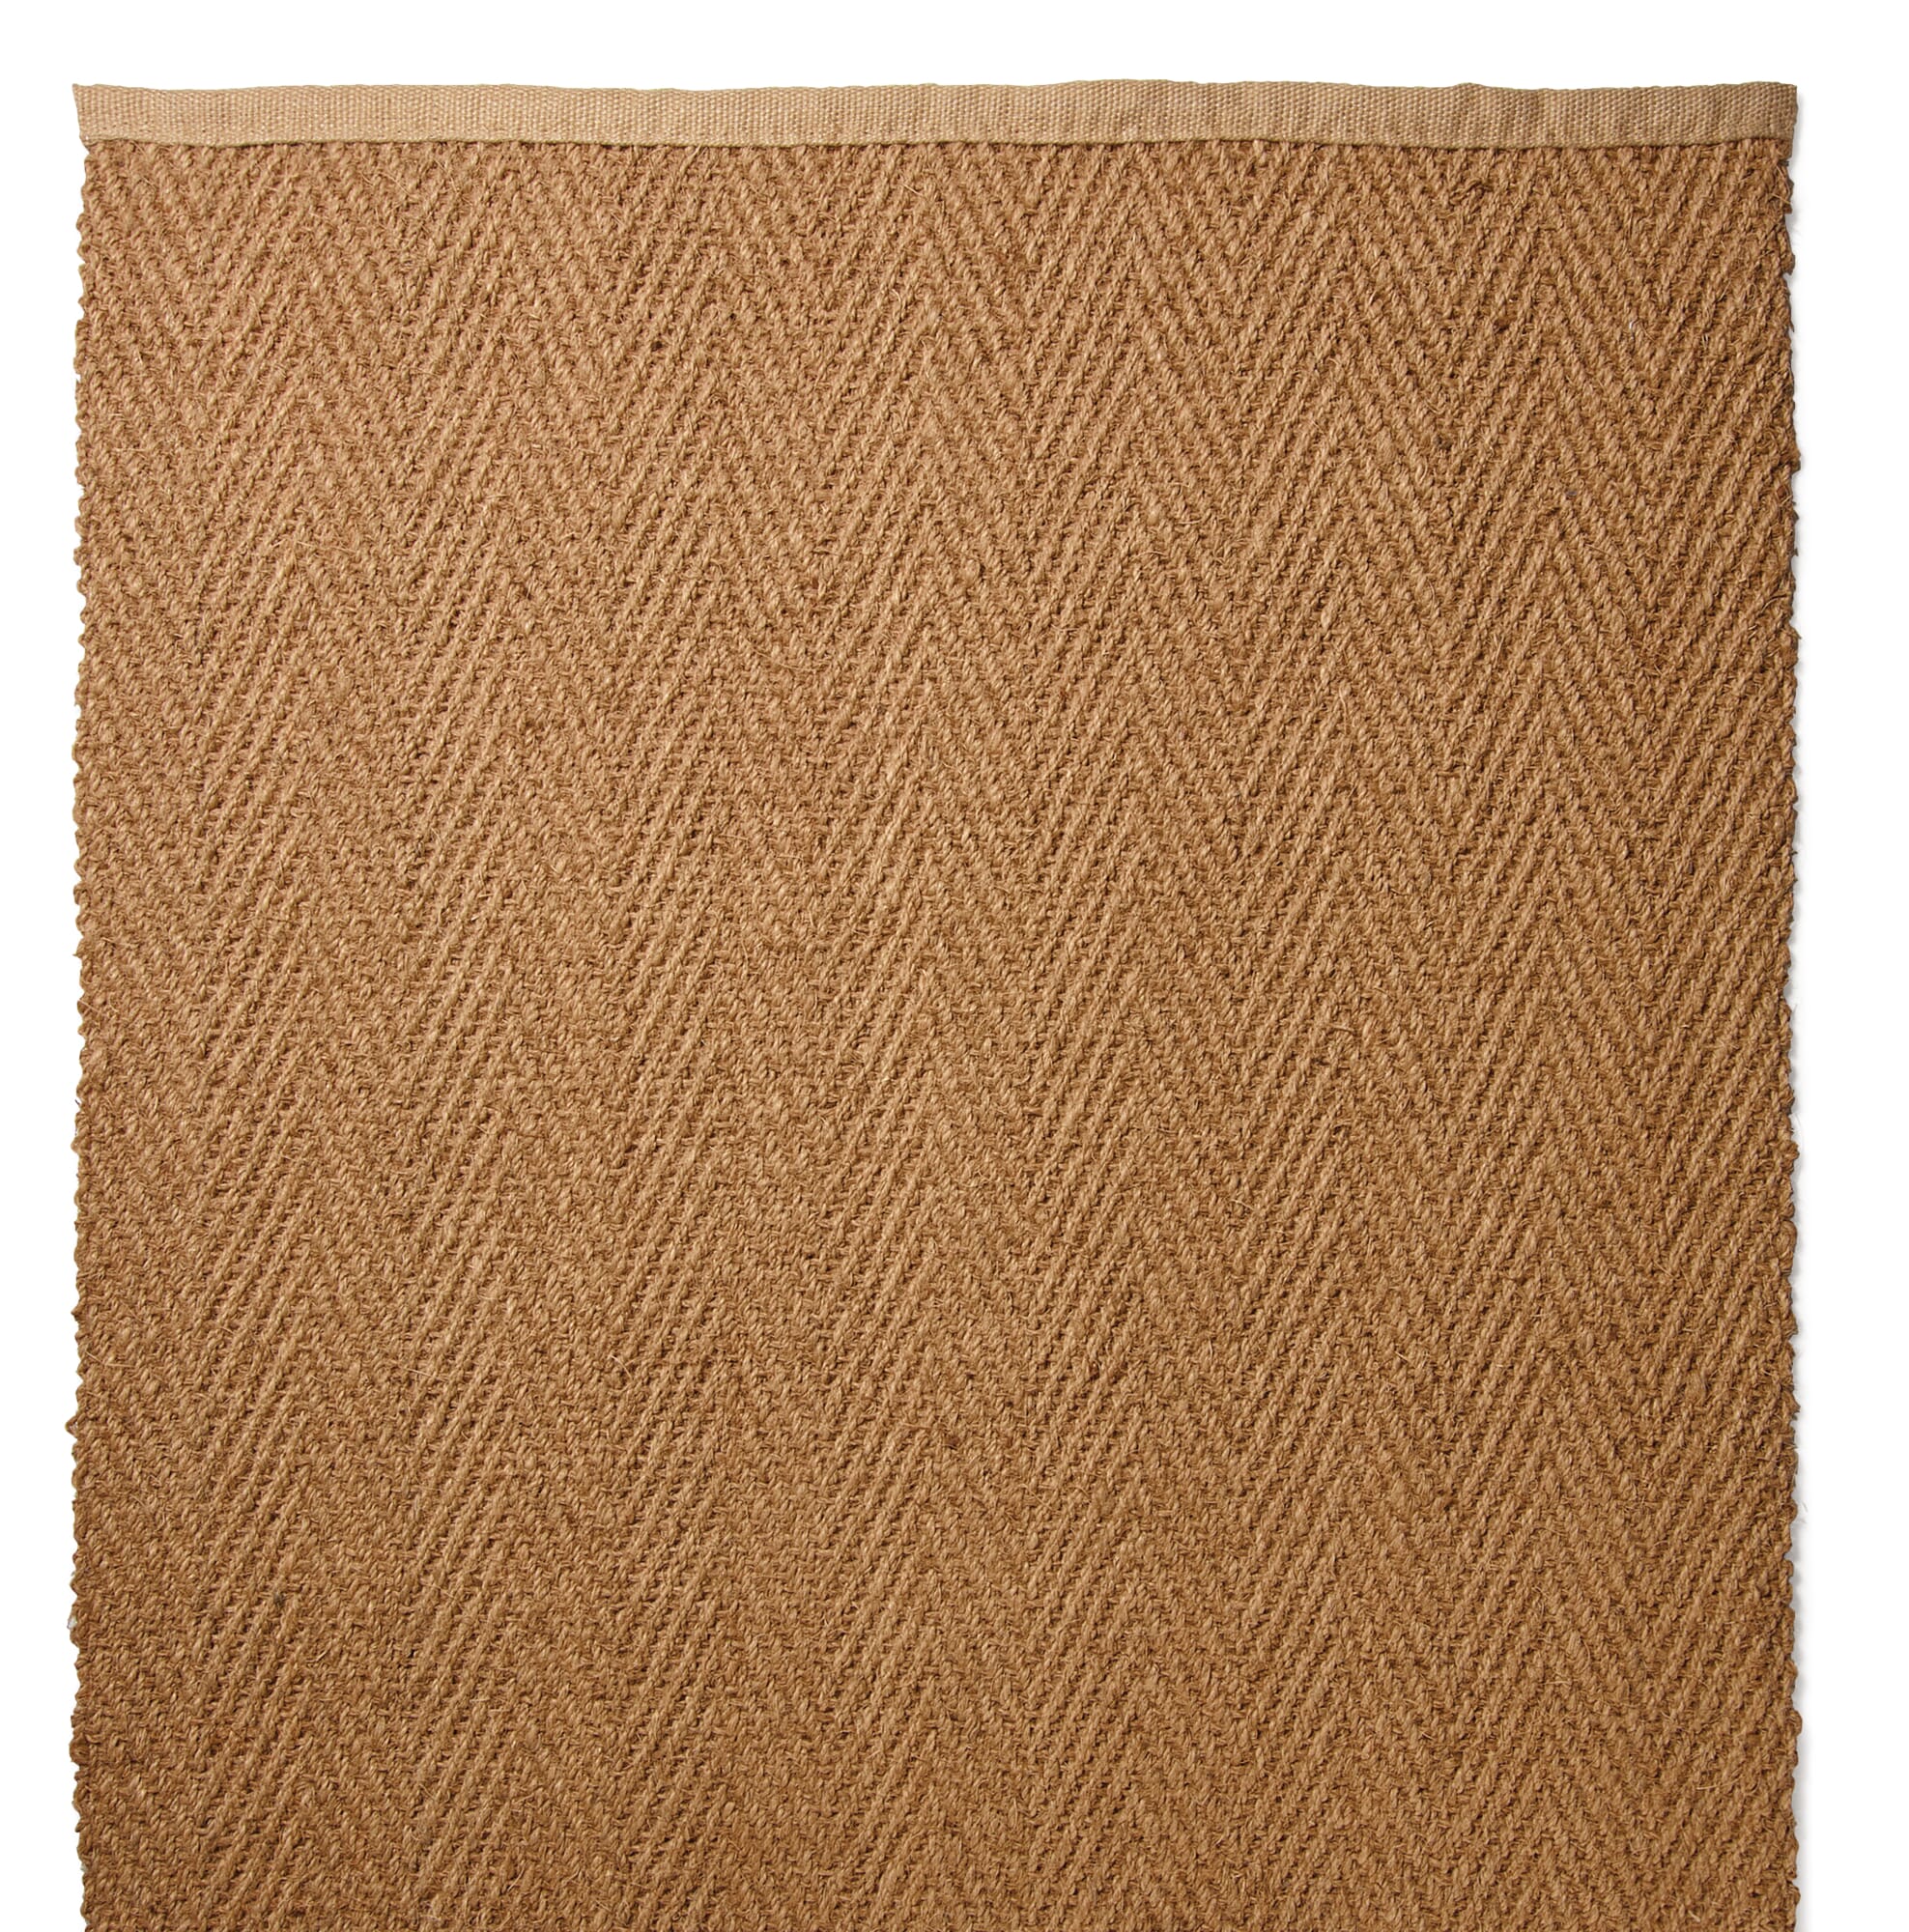 Herringbone Coconut Fiber Carpet, Orange Herringbone Rug